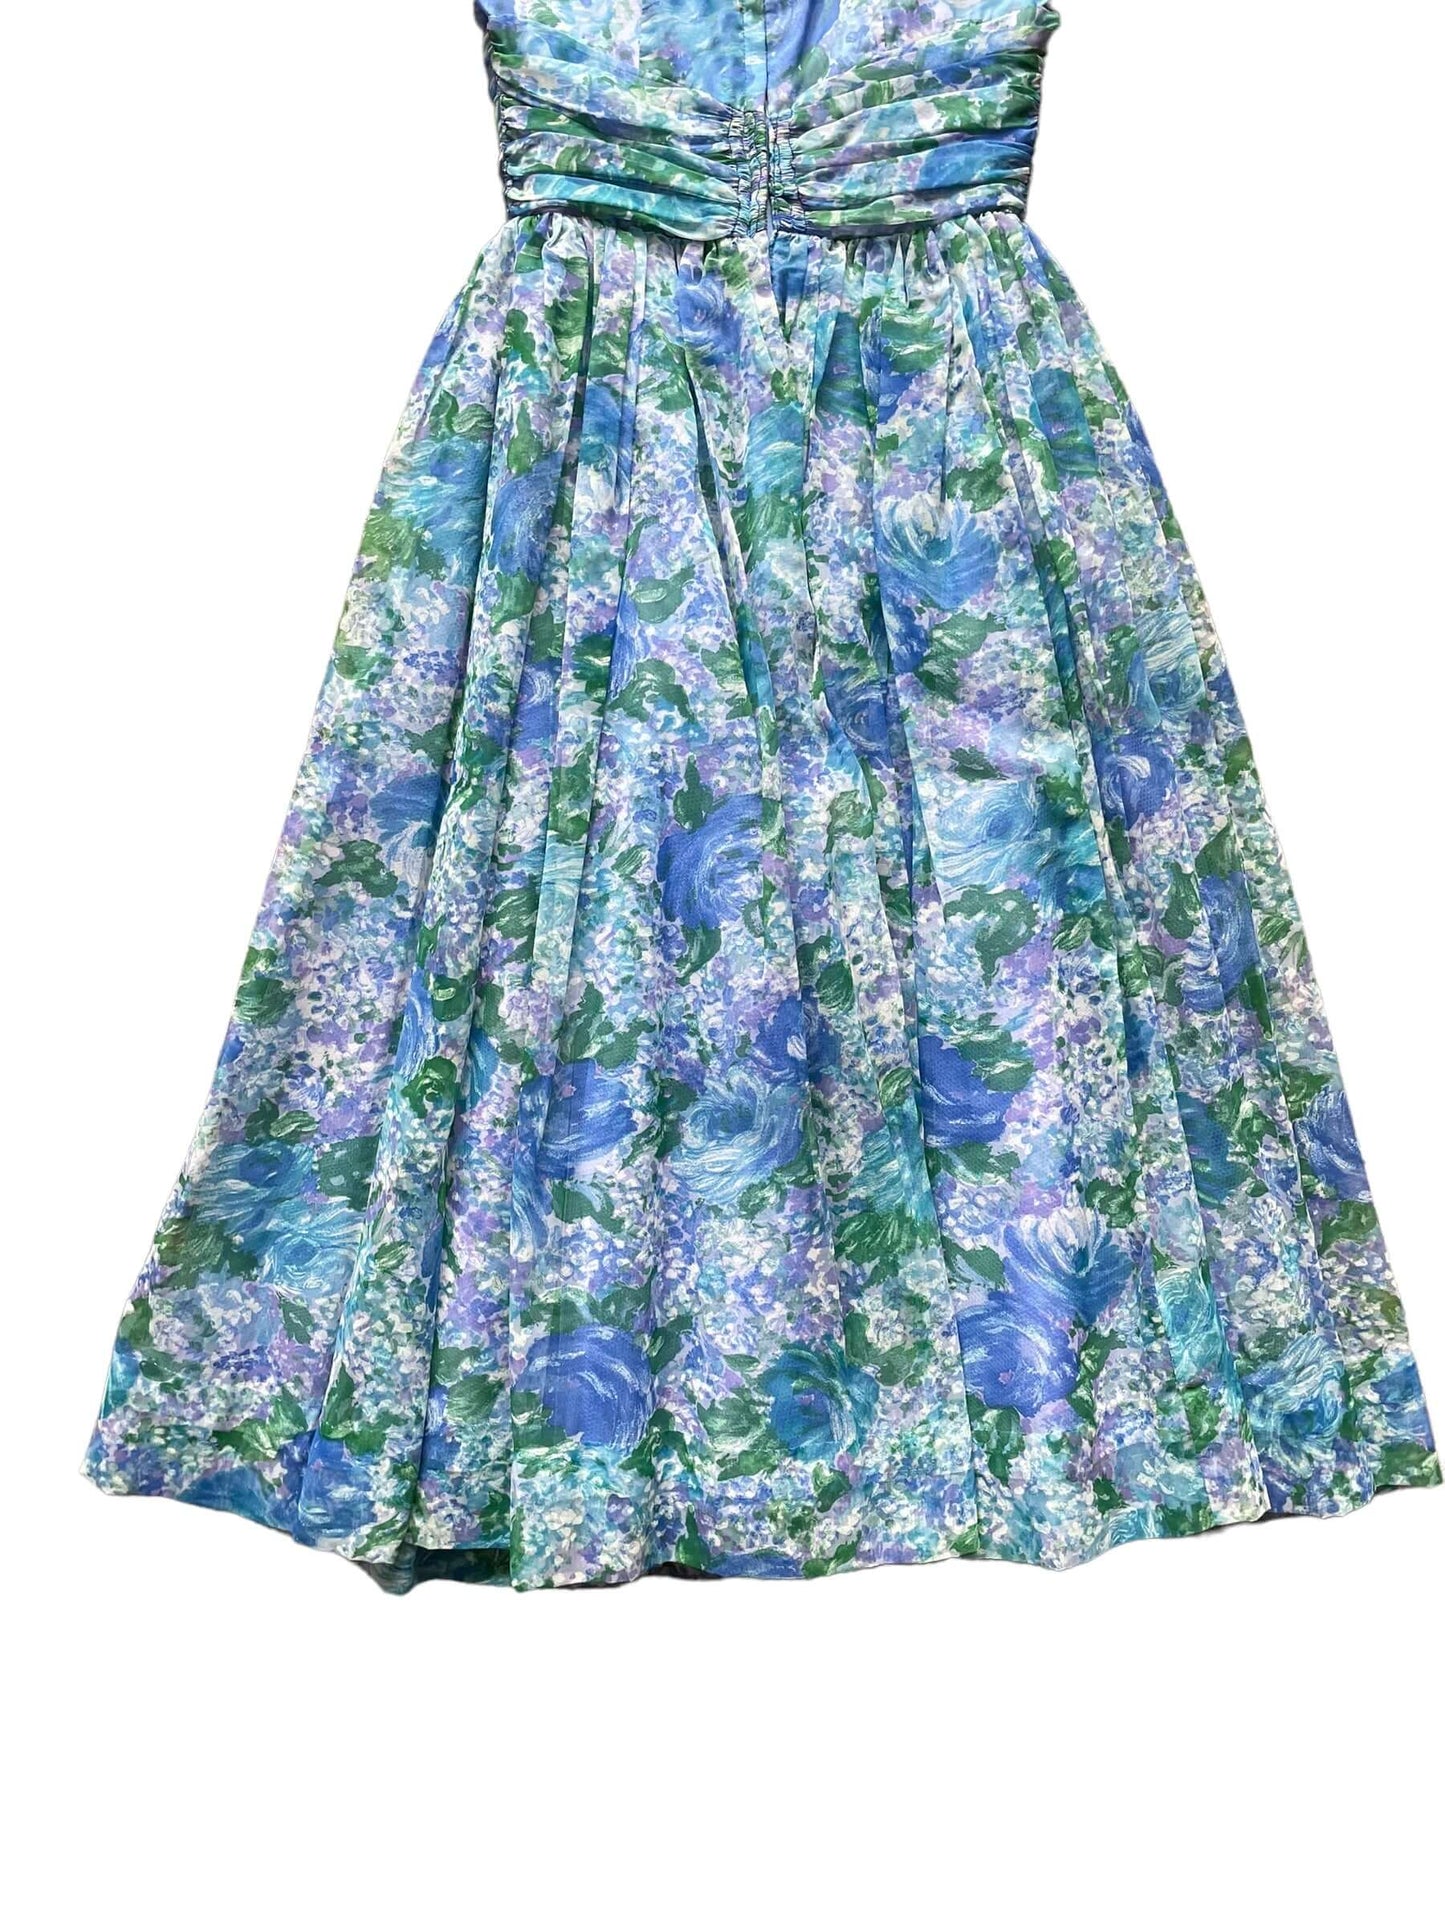 Back skirt view of Vintage 1950s Formal Blue Floral Dress SZ XS | Seattle True Vintage Dresses | Barn Owl Vintage Ladies Clothing